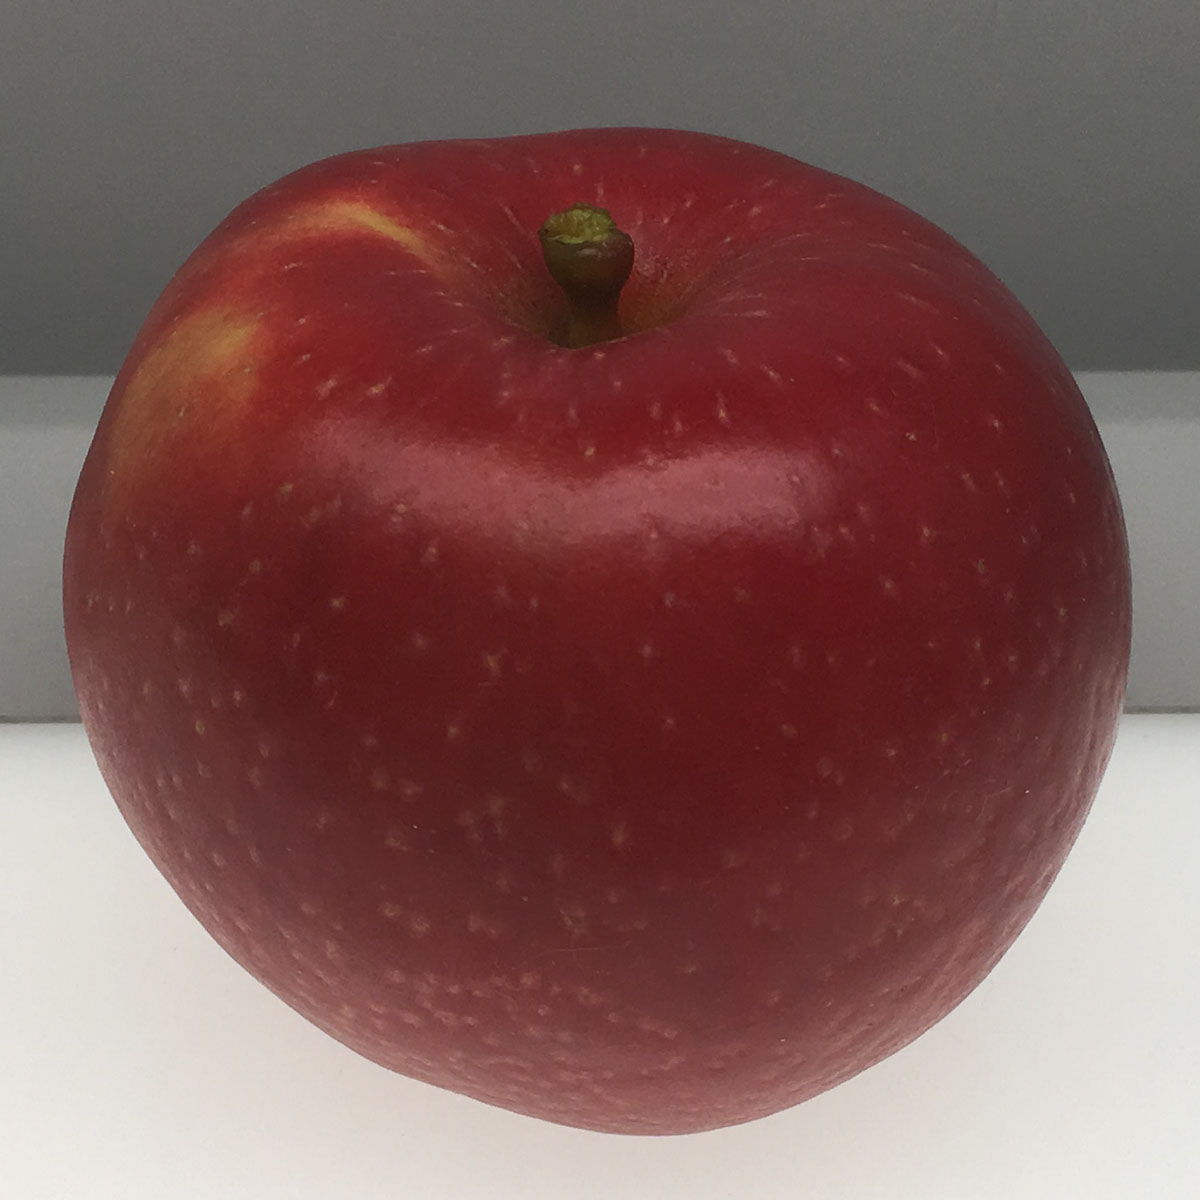 Spitzenberg apple